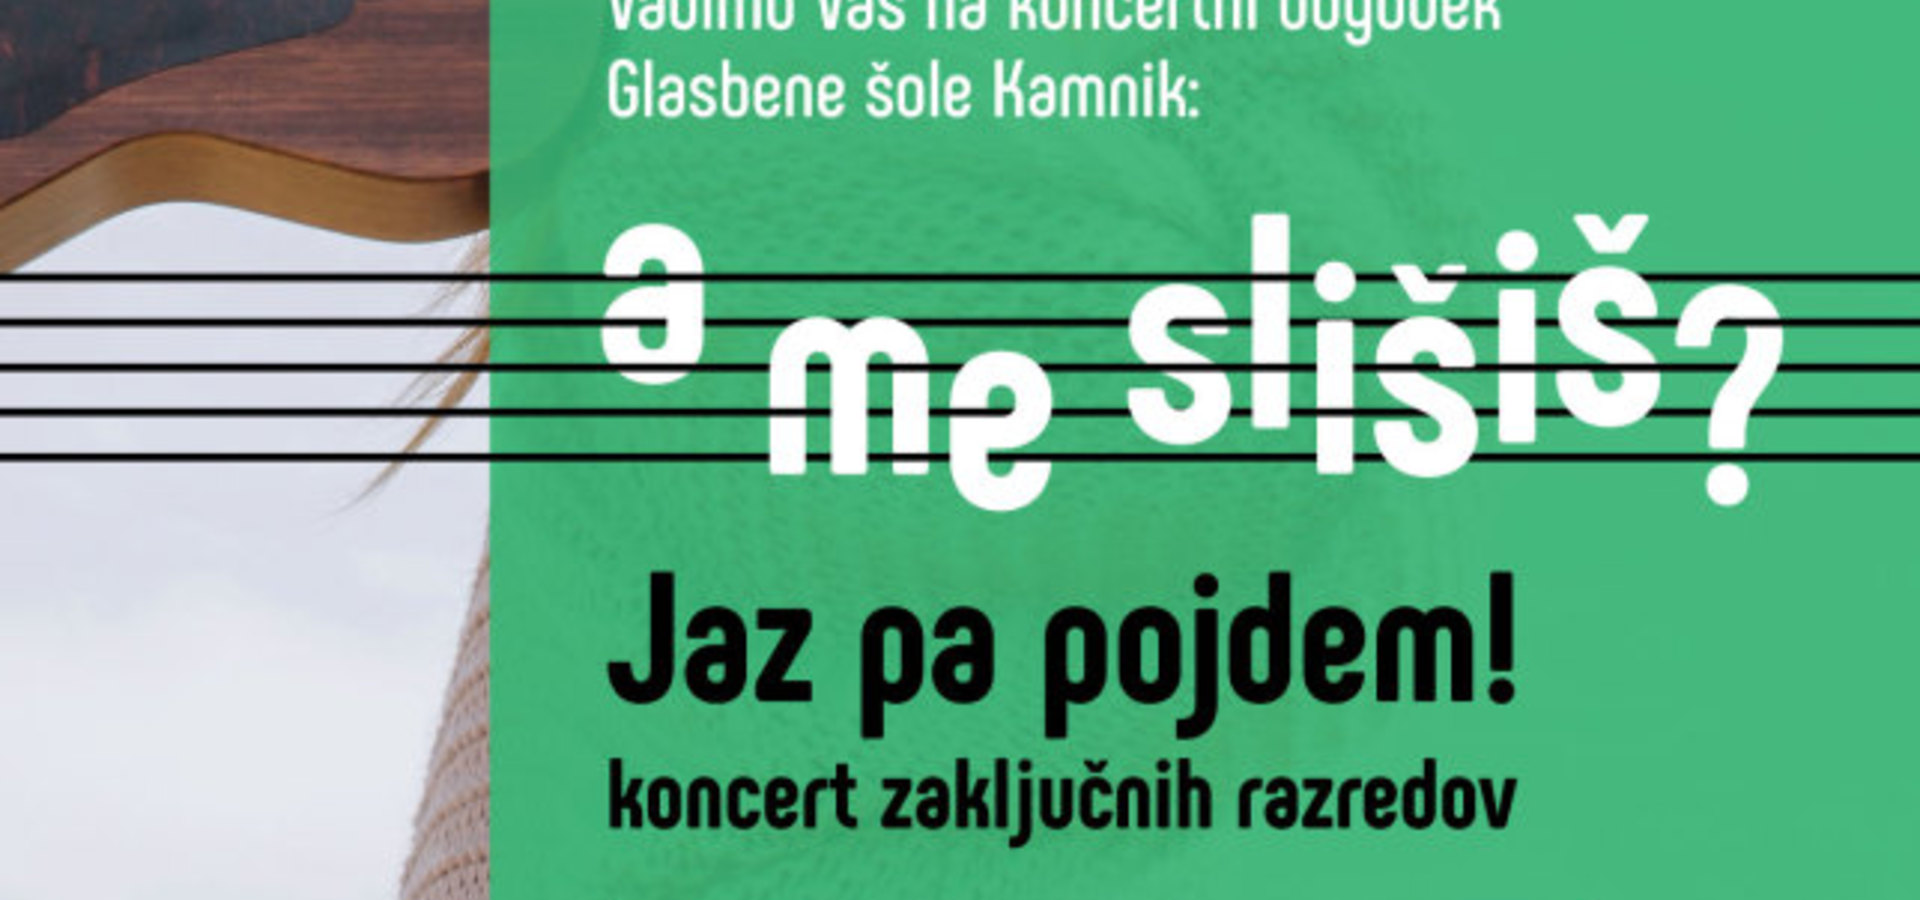 Glasbena šola Kamnik: A me slišiš? 